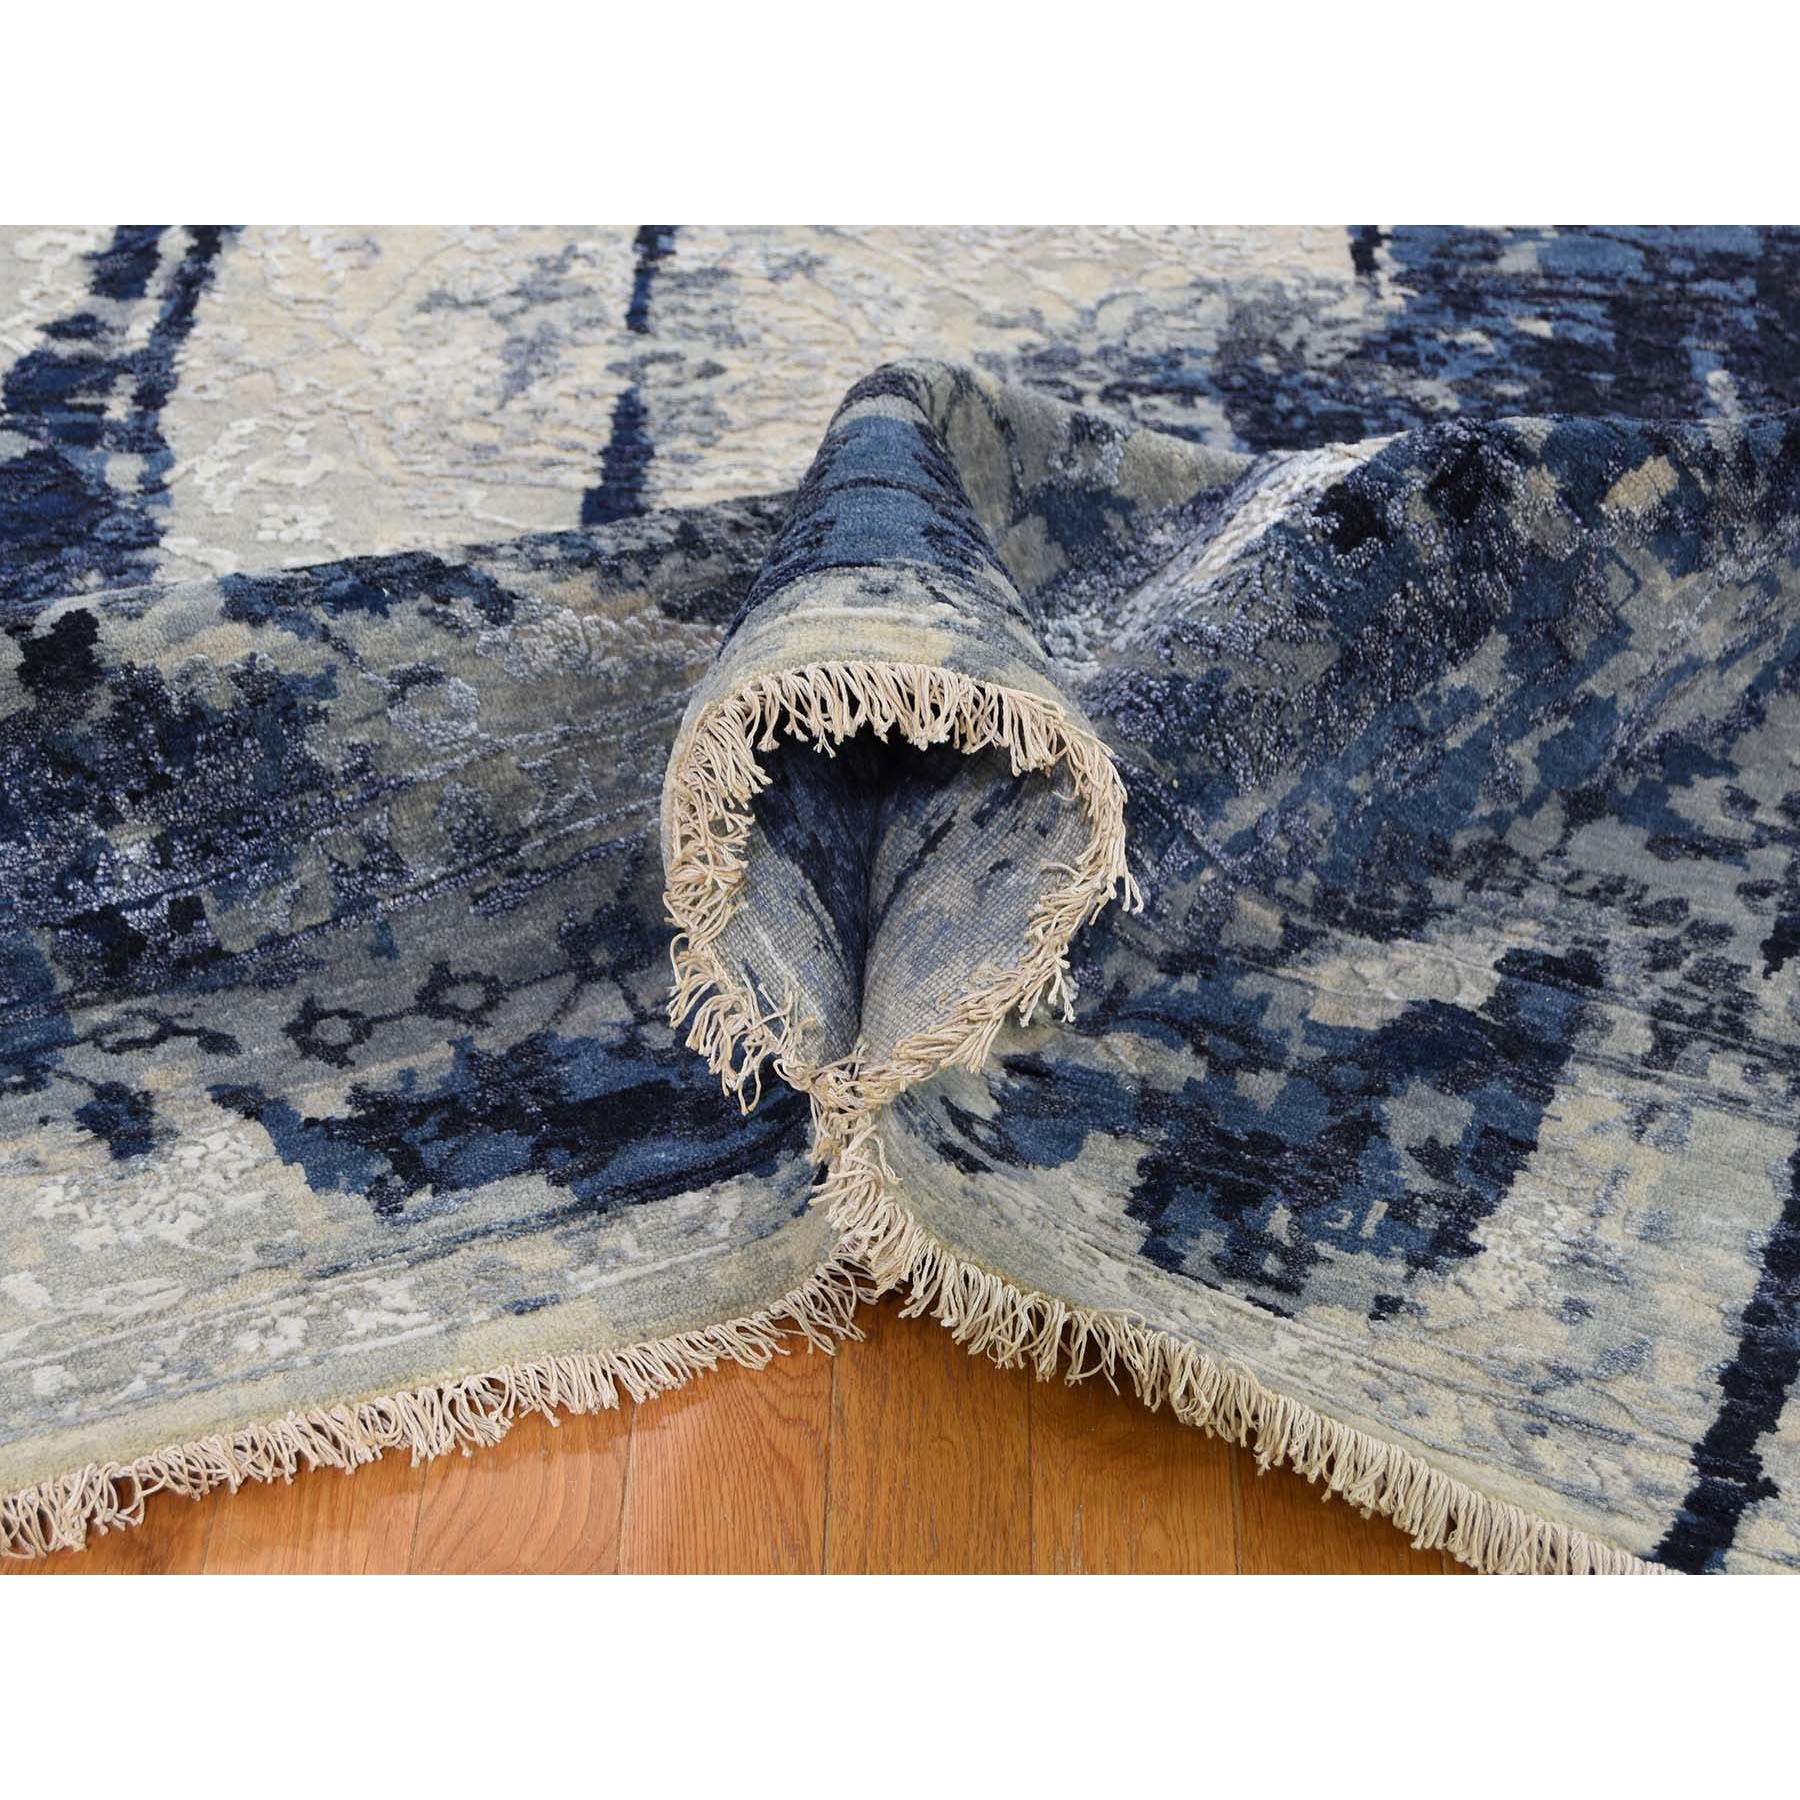 10'x10' Square Wool And Silk Shibori Design Tone On Tone Hand Woven Oriental Rug 